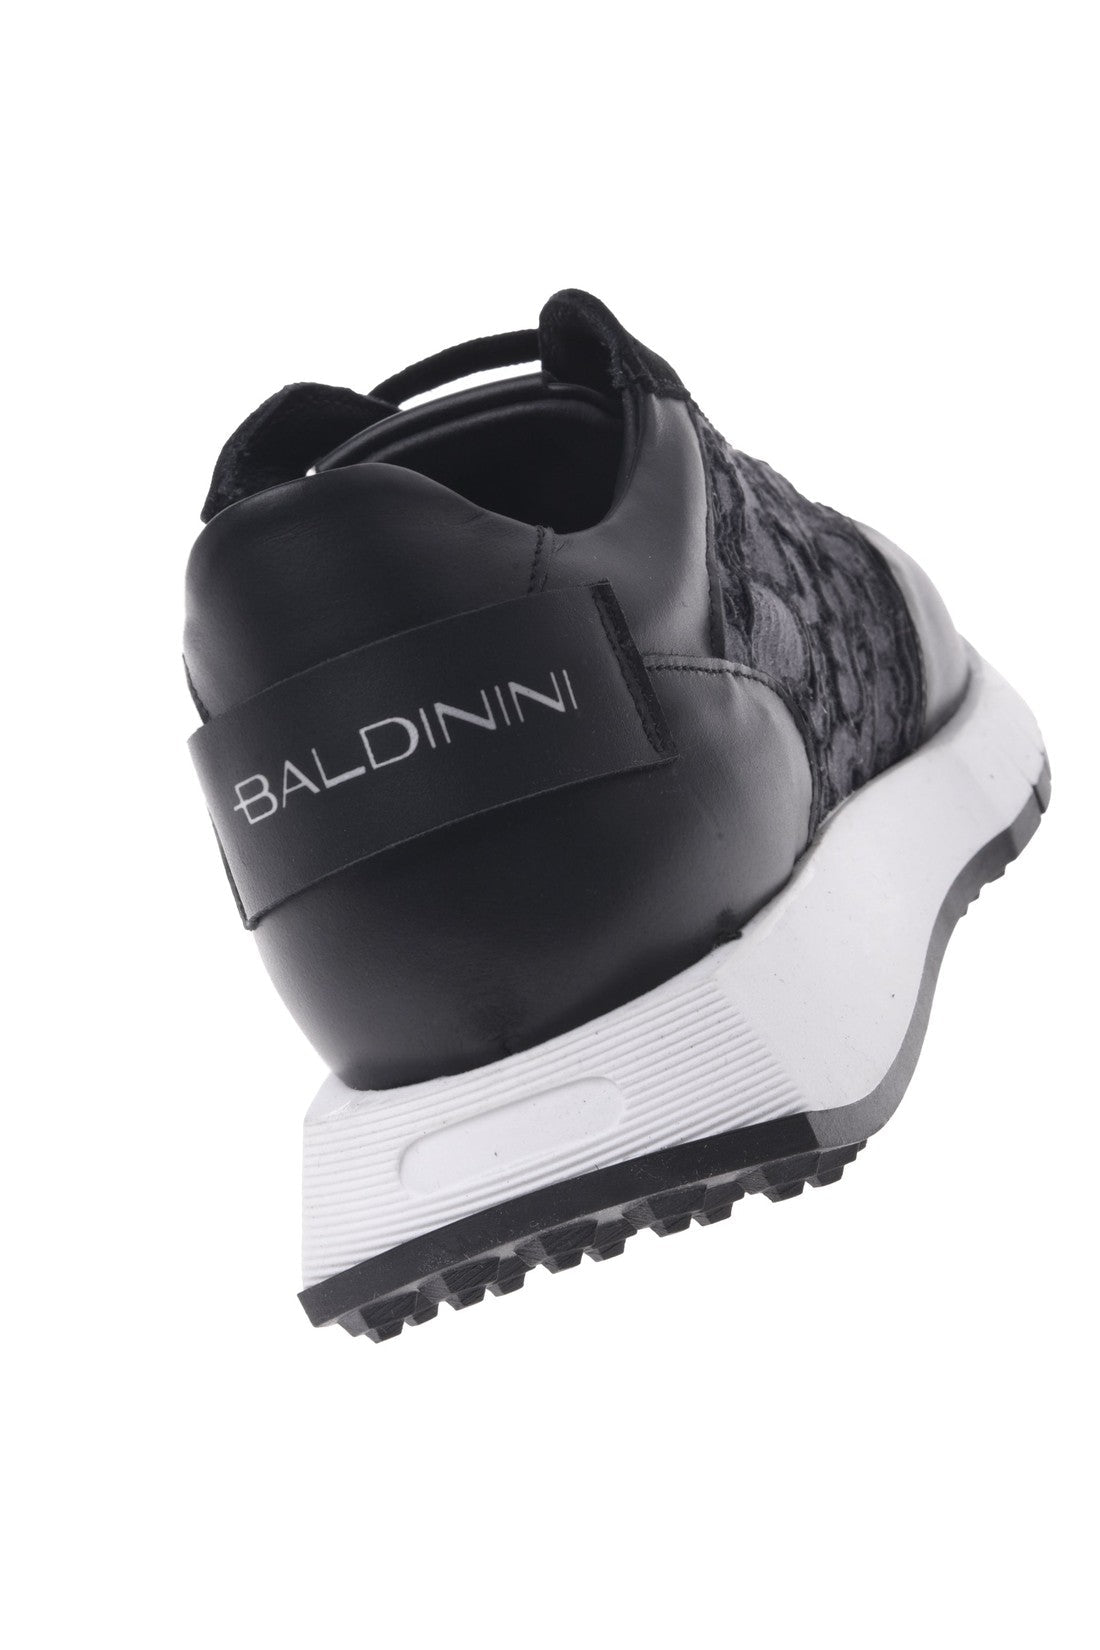 BALDININI-OUTLET-SALE-Sneaker-in-black-nappa-leather-and-lace-Sneaker-ARCHIVE-COLLECTION-4_cb23dbf6-7e18-4d86-a306-07308bdec720.jpg